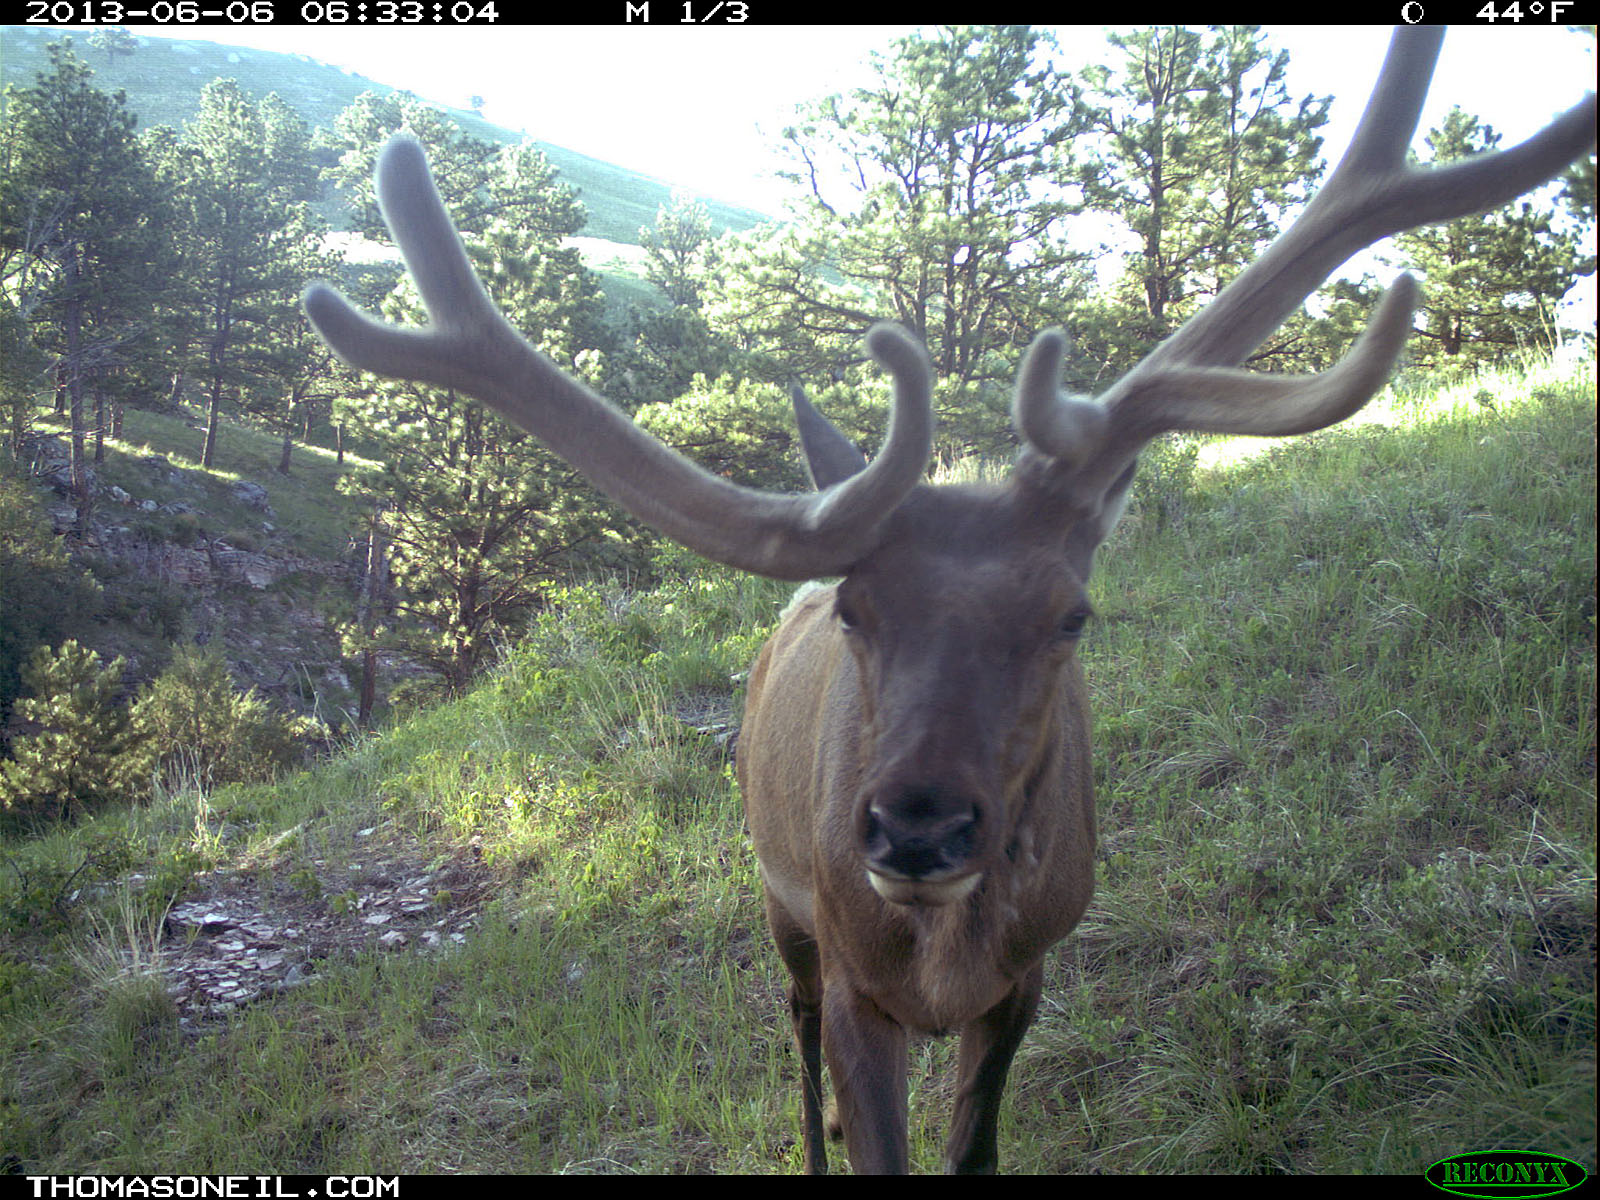 Lopsided antlers, elk on trail camera, Wind Cave National Park, South Dakota, June 6, 2013.  Click for next photo.